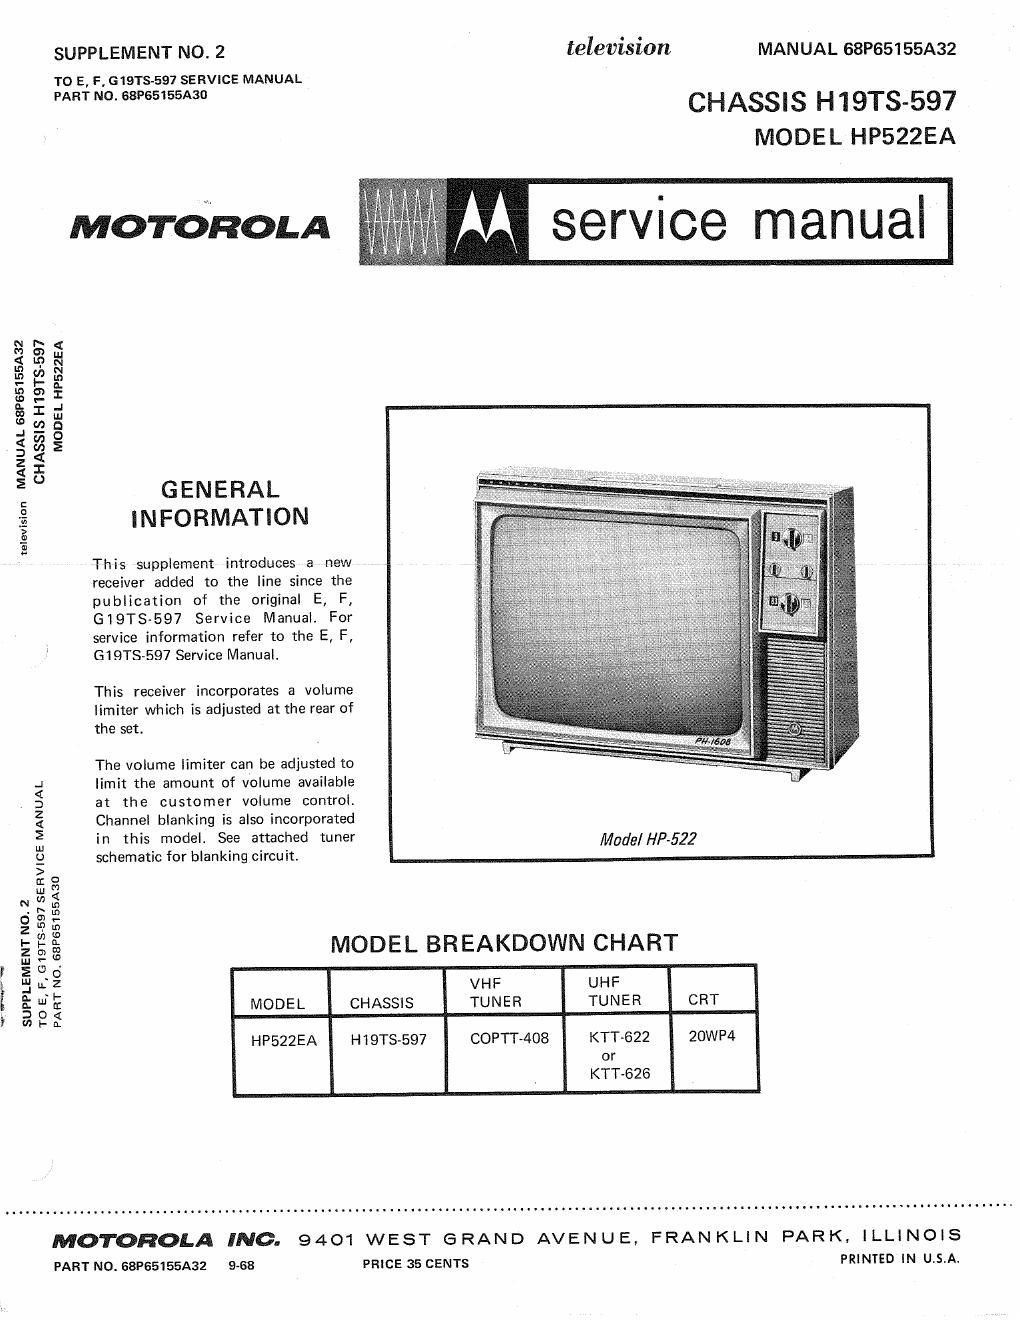 motorola hp 522 ea service manual